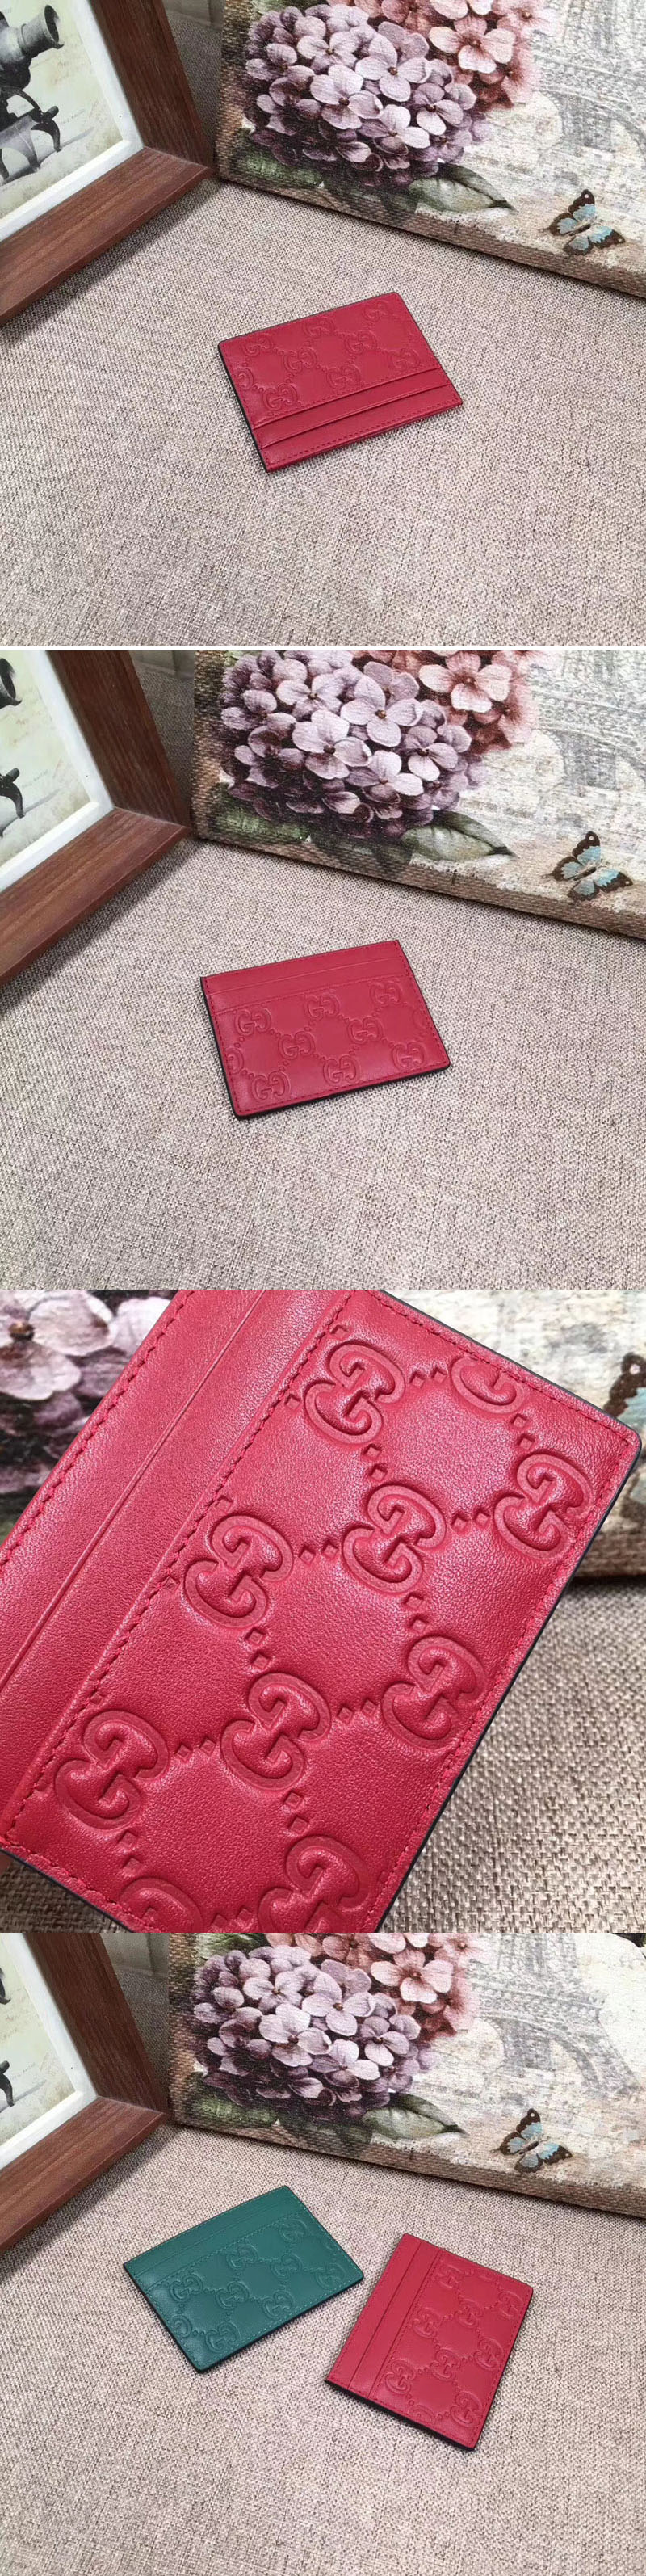 Replica Gucci 233166 Signature leather card case Red